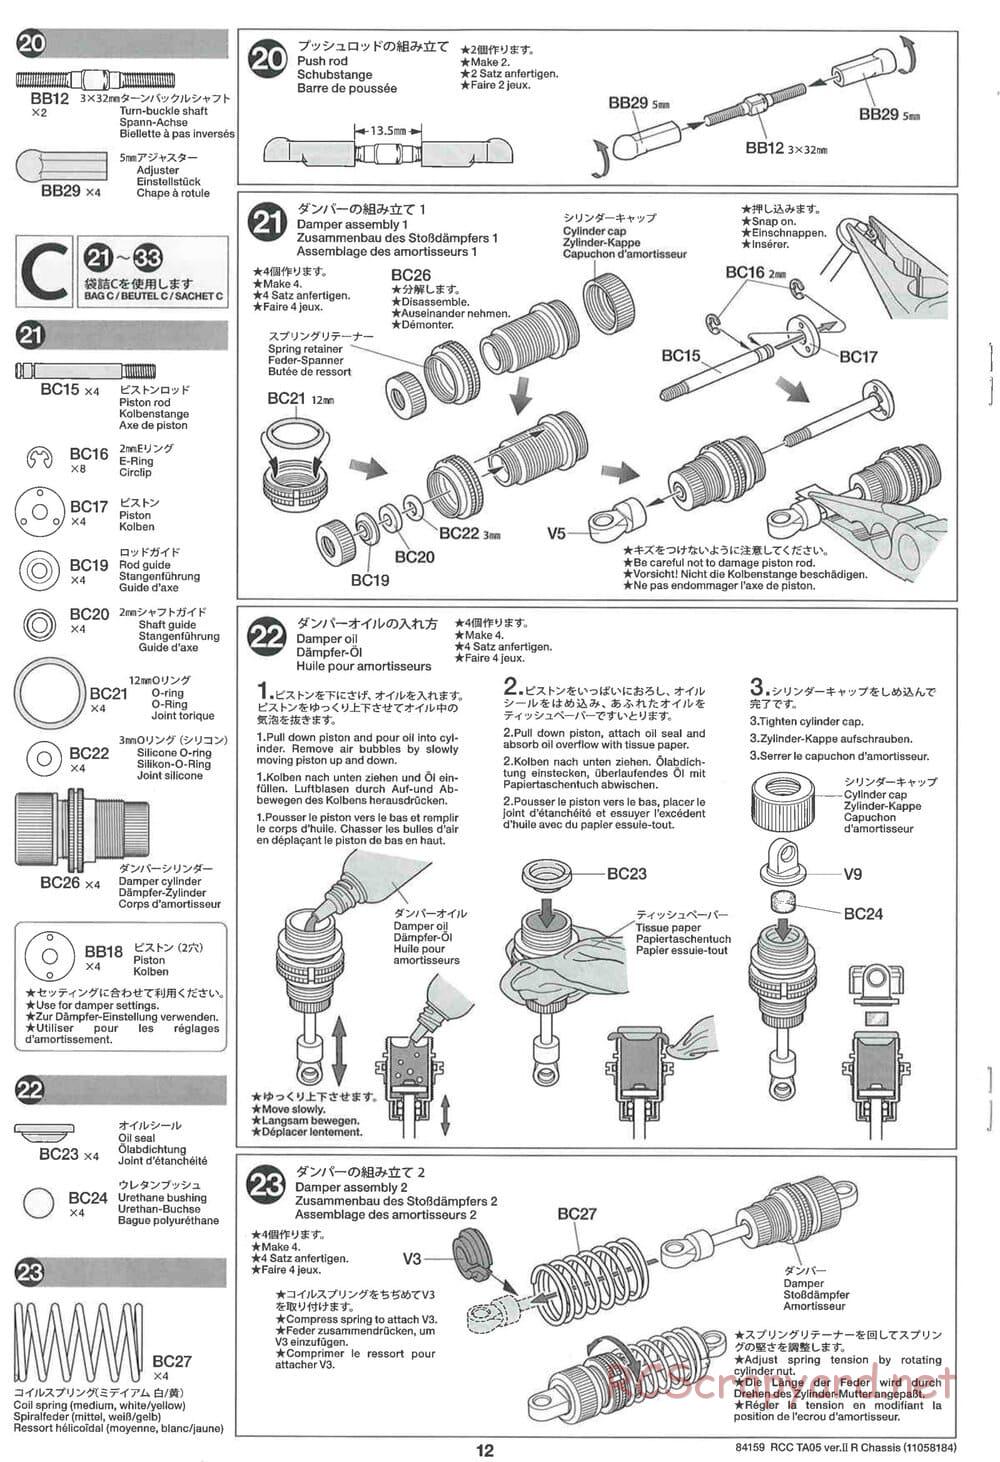 Tamiya - TA05 Ver.II R Chassis - Manual - Page 12